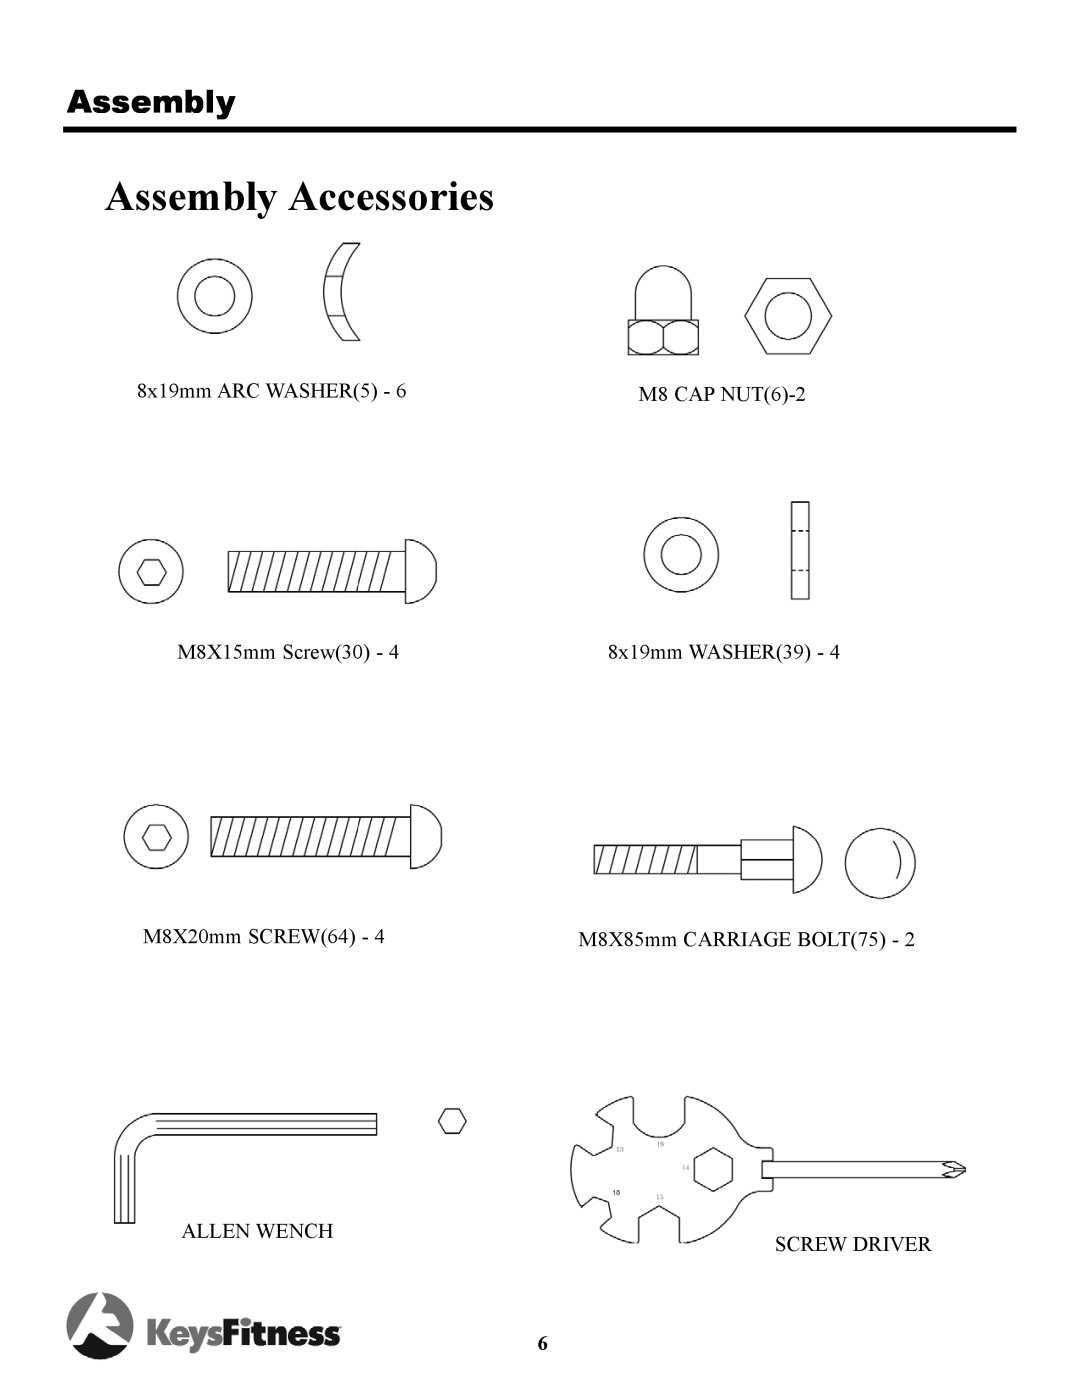 Keys Fitness 700u Assembly Accessories, 8x19mm ARC WASHER5, M8 CAP NUT6-2, M8X15mm Screw30, 8x19mm WASHER39, Allen Wench 